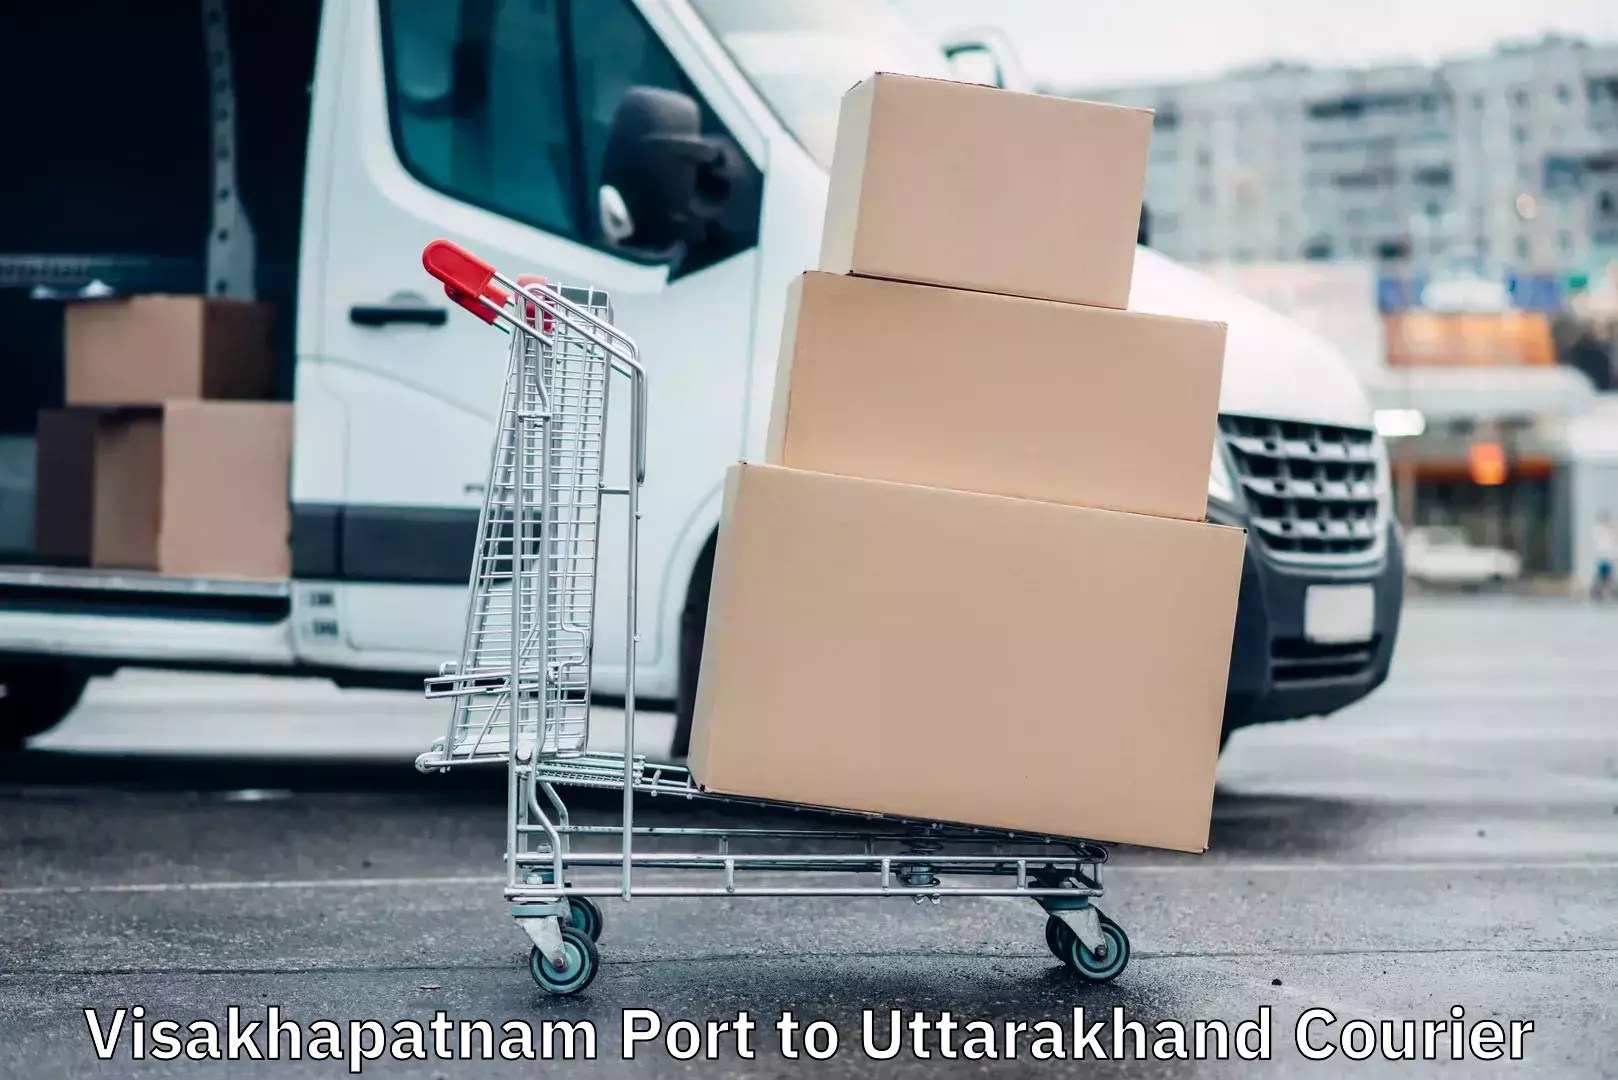 Express logistics service in Visakhapatnam Port to Uttarakhand